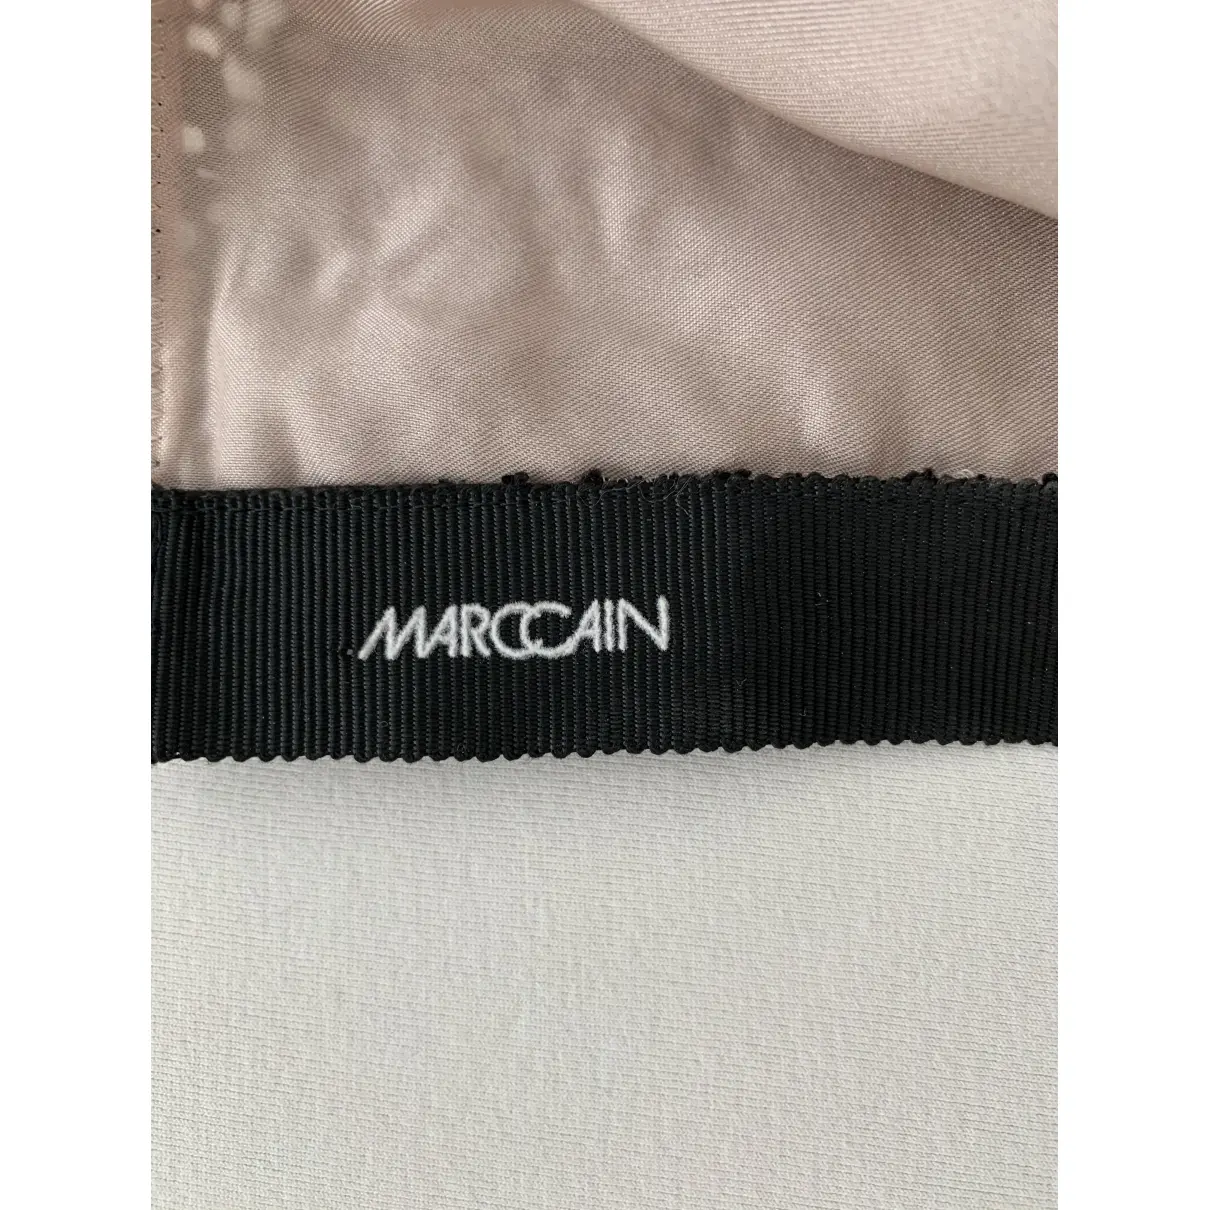 Buy Marc Cain Mini dress online